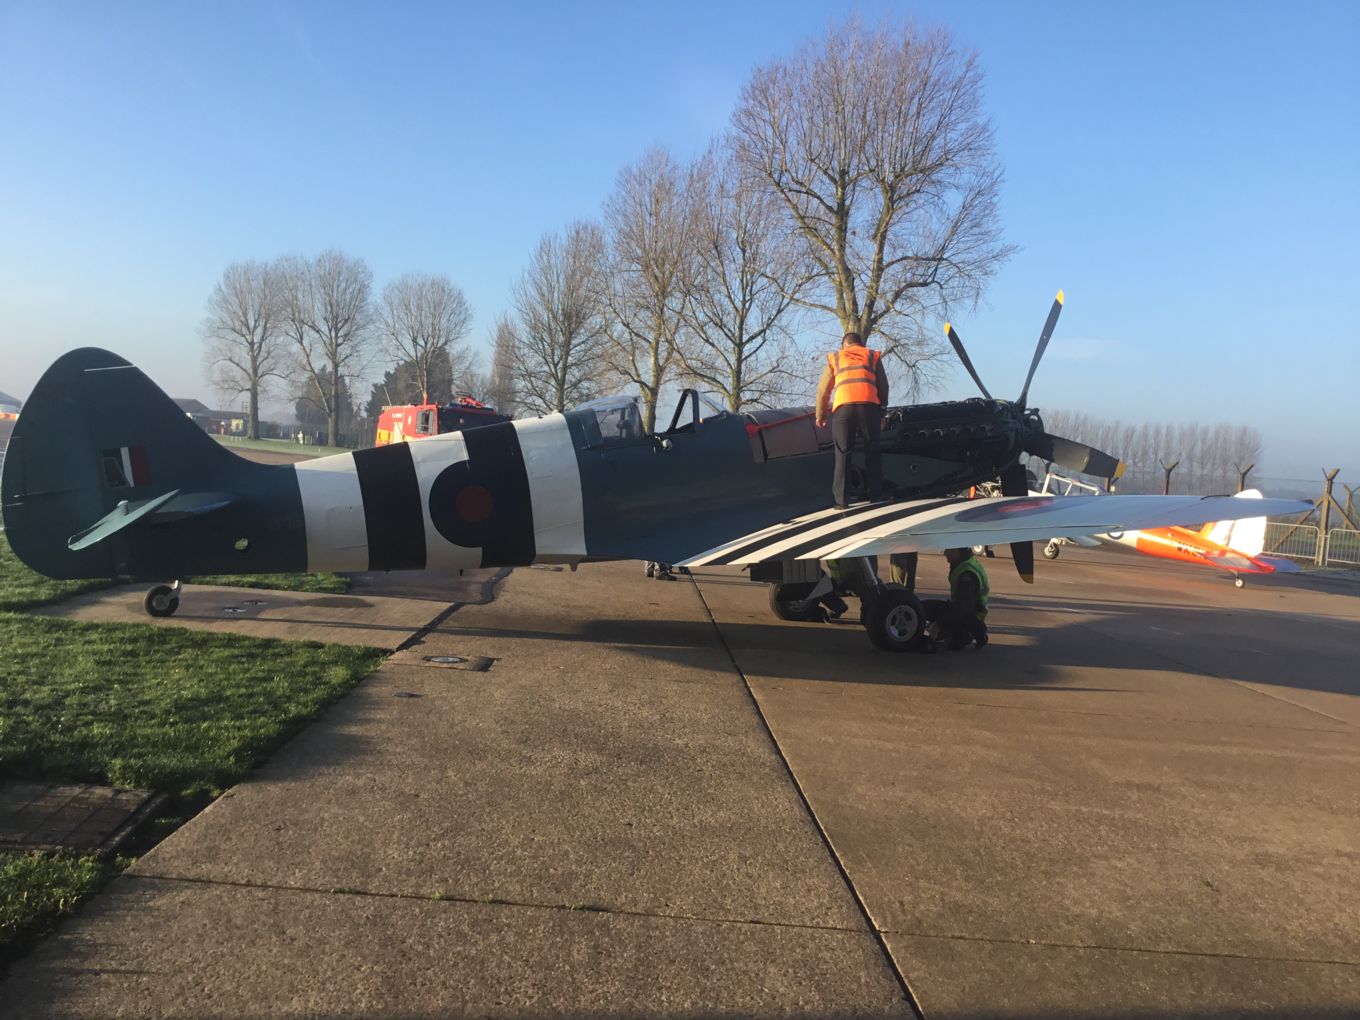 Spitfire PM631